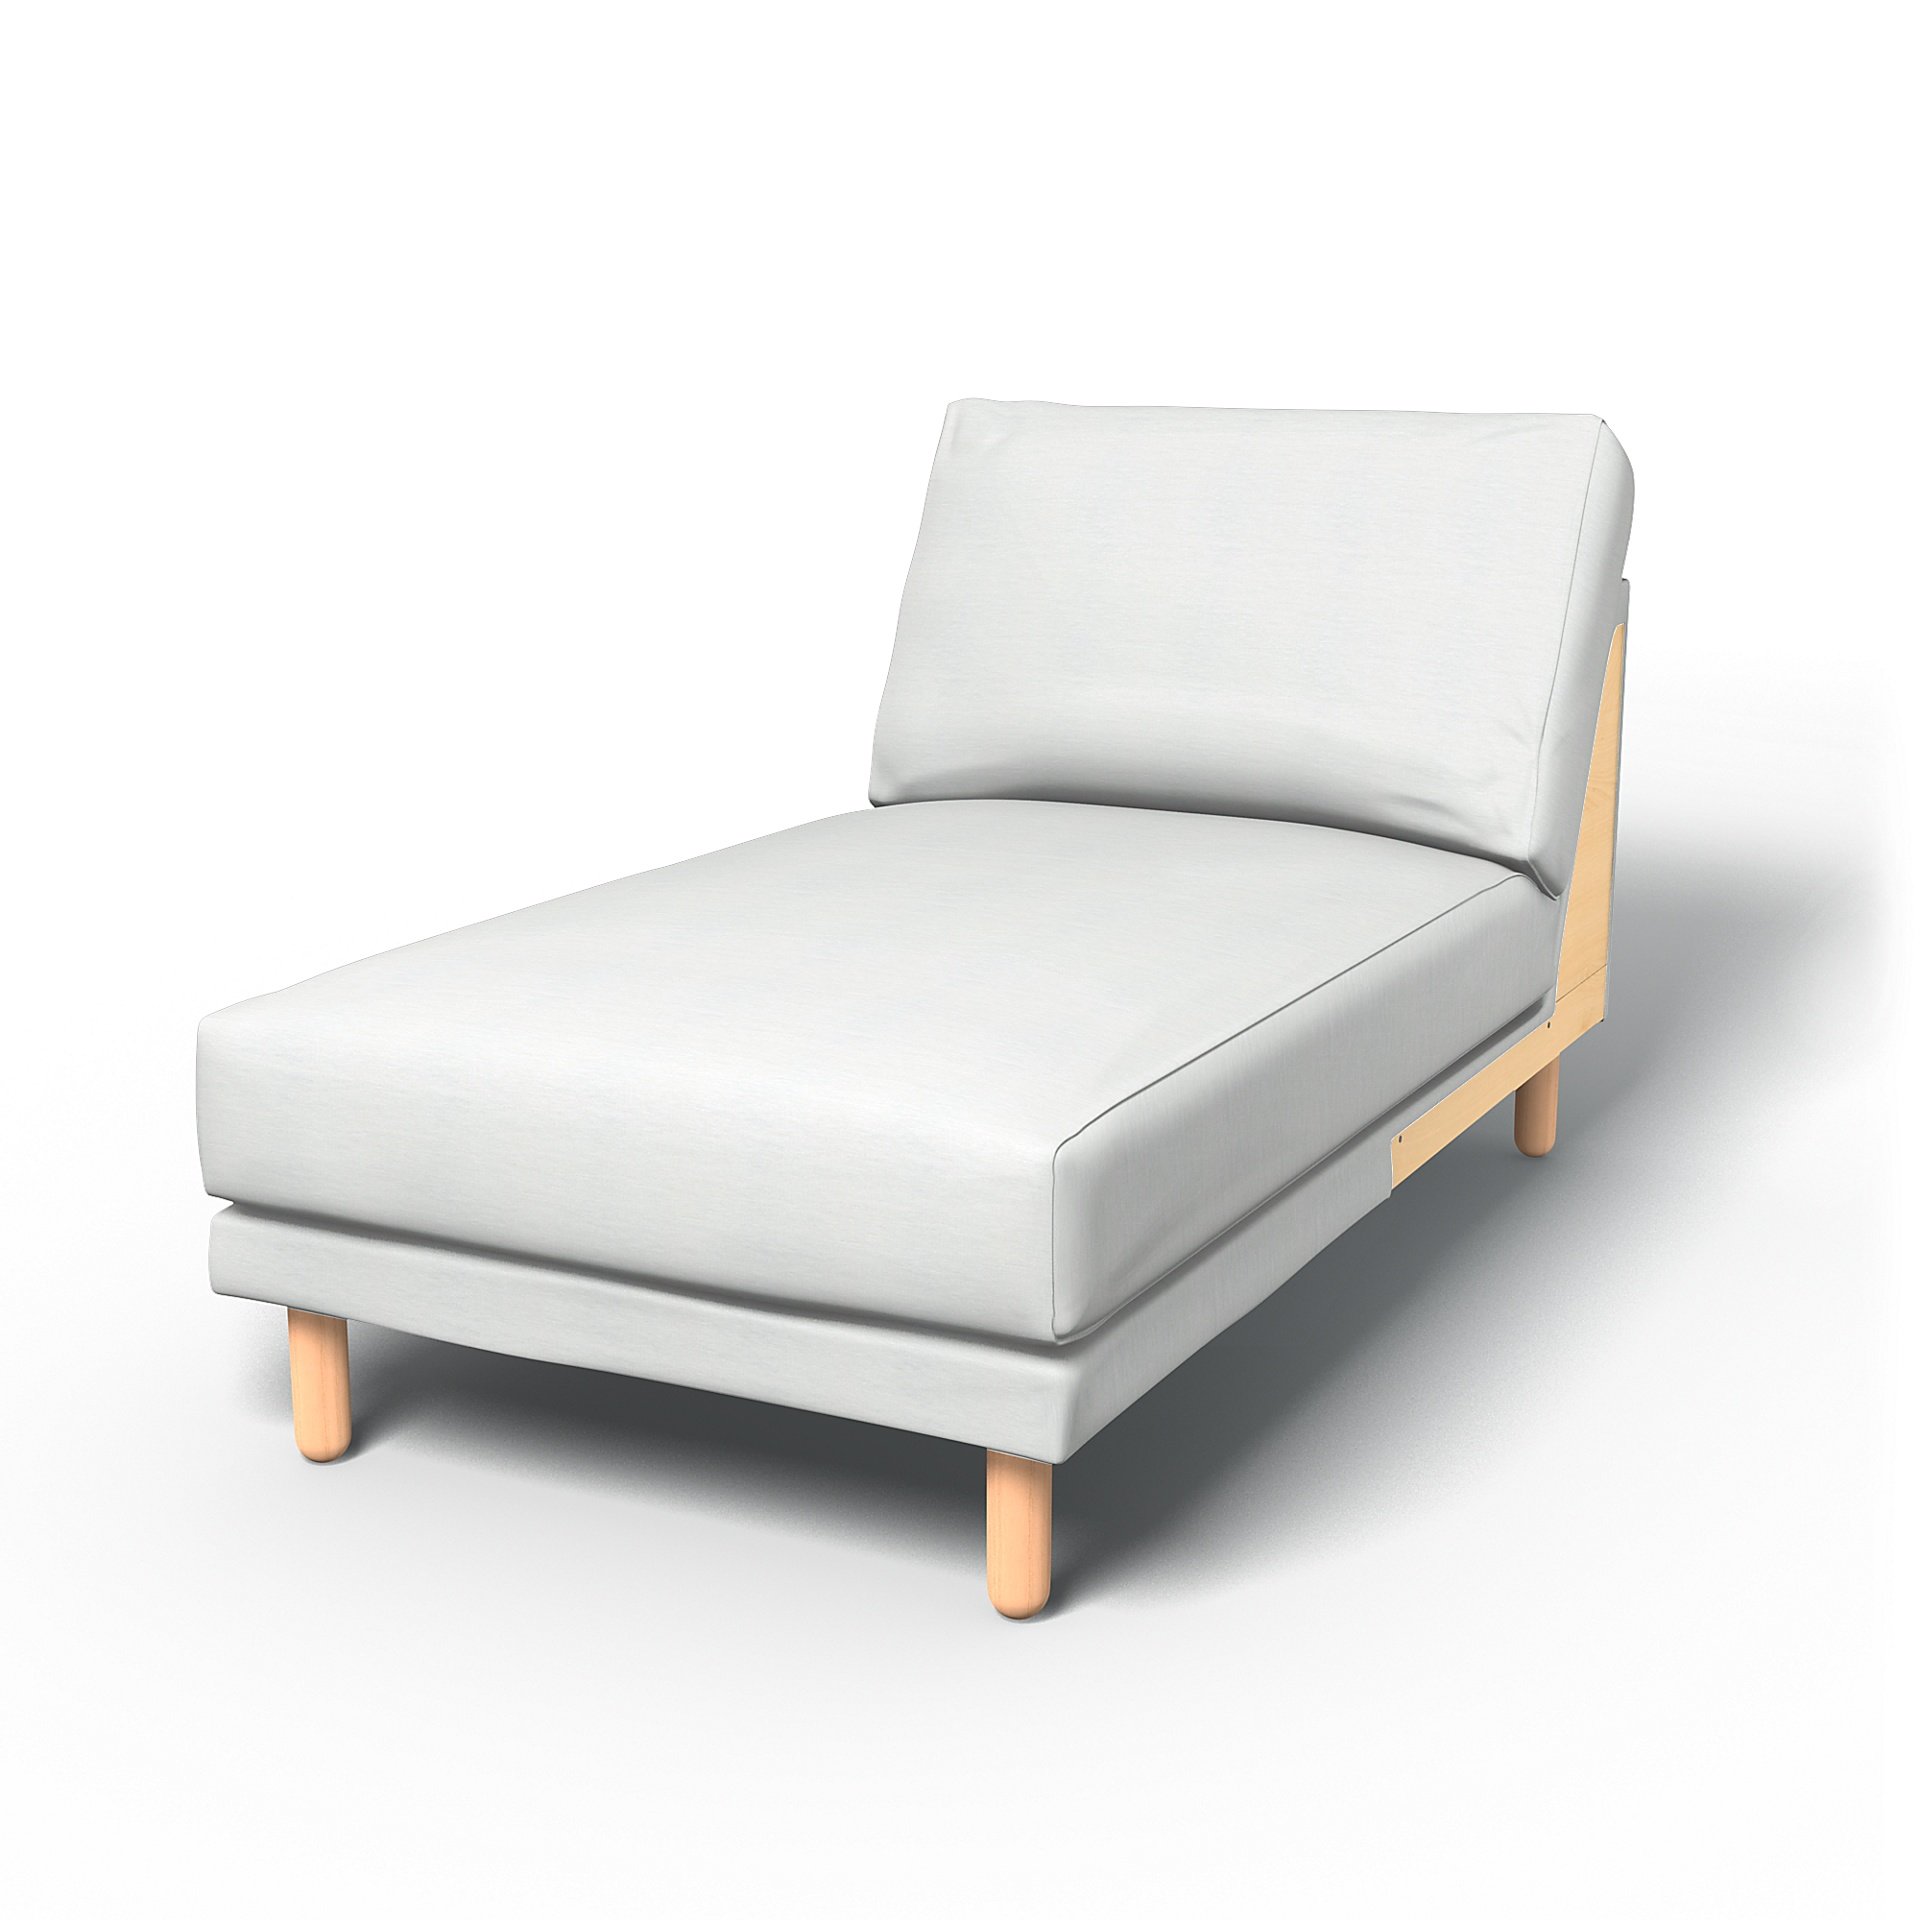 IKEA - Norsborg Chaise Longue Add-on Unit Cover, White, Linen - Bemz